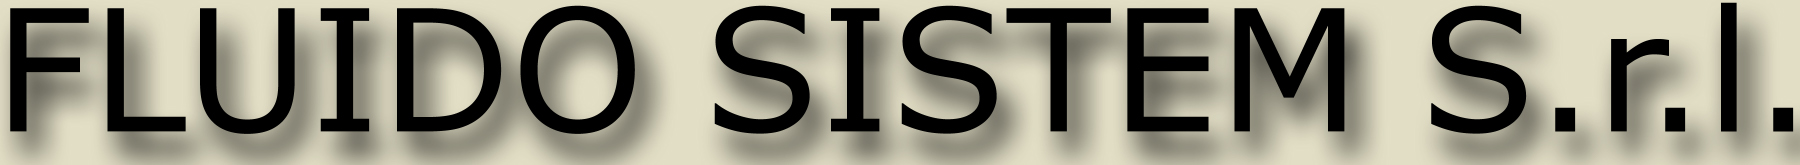 FLUIDO SISTEM logo